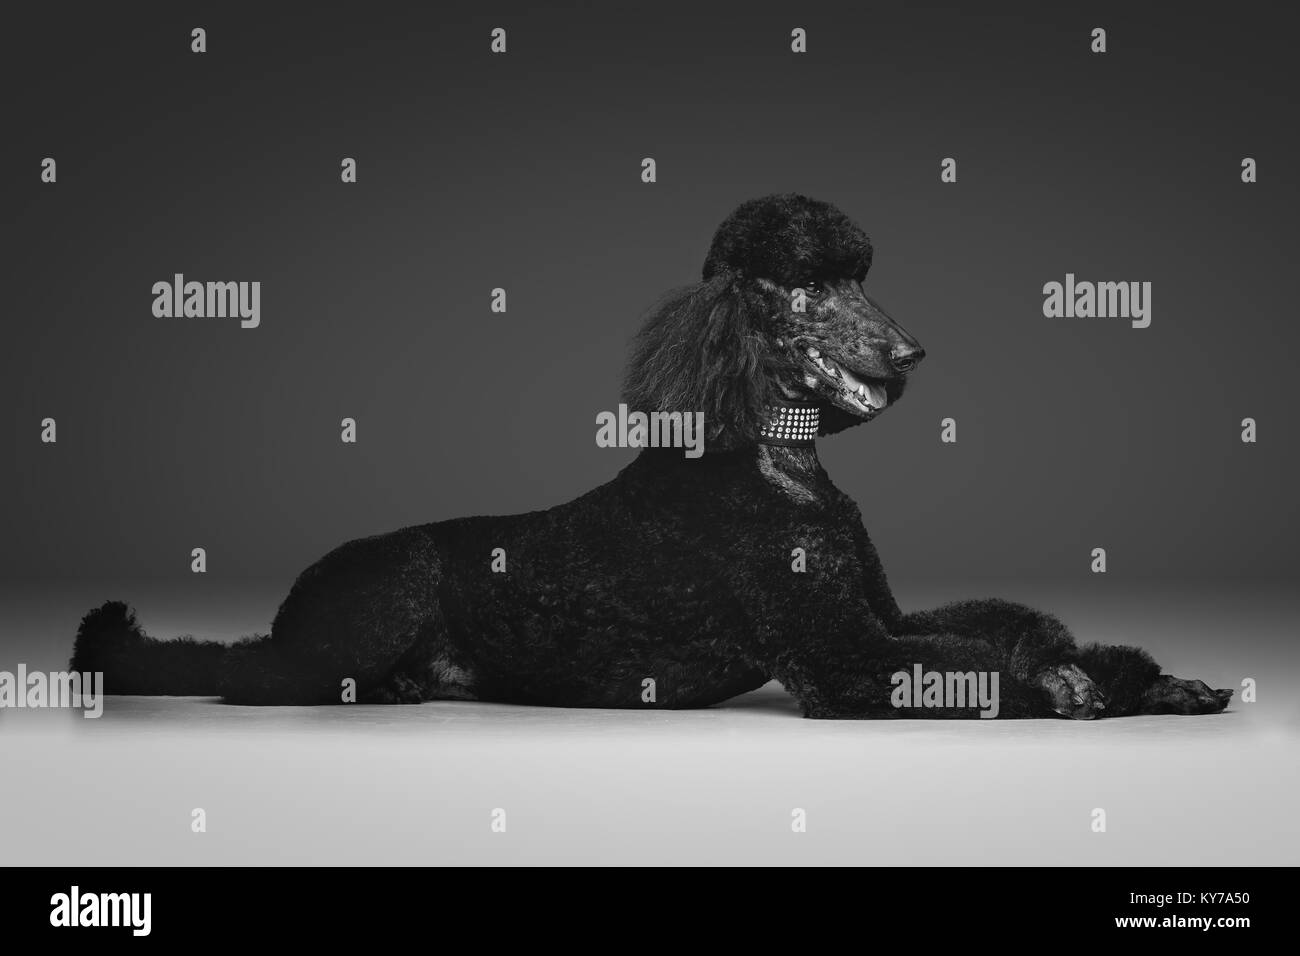 beautiful adult black poodle dog. Studio shot on grey background. Copy space. Stock Photo